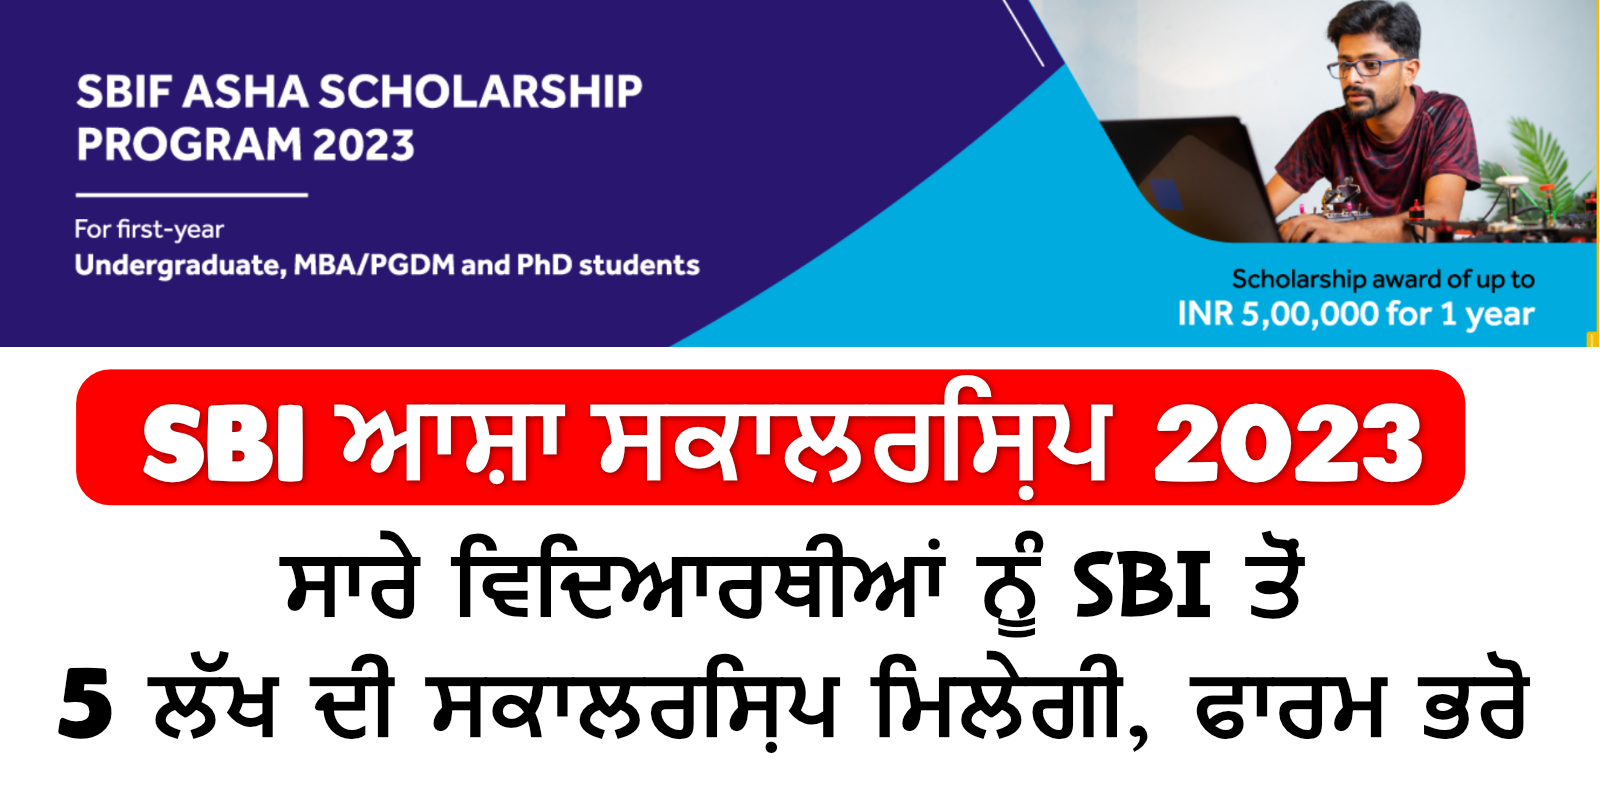 SBI Asha Scholarship 2023 ਸਾਰੇ ਵਿਦਿਆਰਥੀਆਂ ਨੂੰ SBI ਤੋਂ 5 ਲੱਖ ਦੀ ਸਕਾਲਰਸ਼ਿਪ ਮਿਲੇਗੀ, ਫਾਰਮ ਭਰੋ